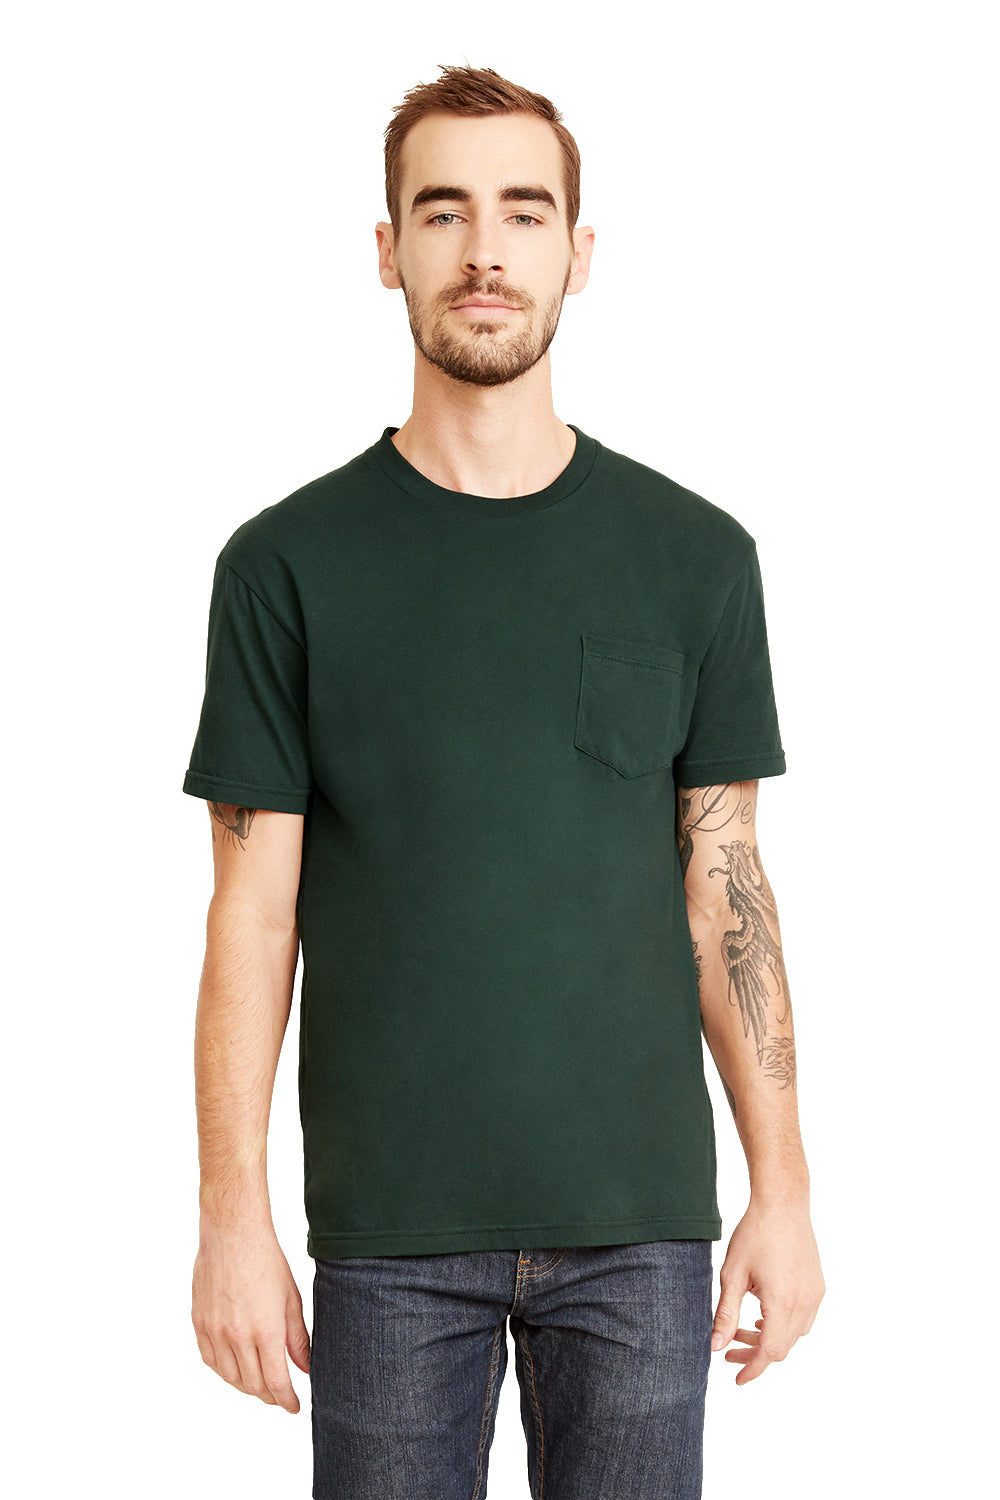 Next Level 3605 Mens Fine Jersey Short Sleeve Crewneck T-Shirt w/ Pocket Forest Green Front